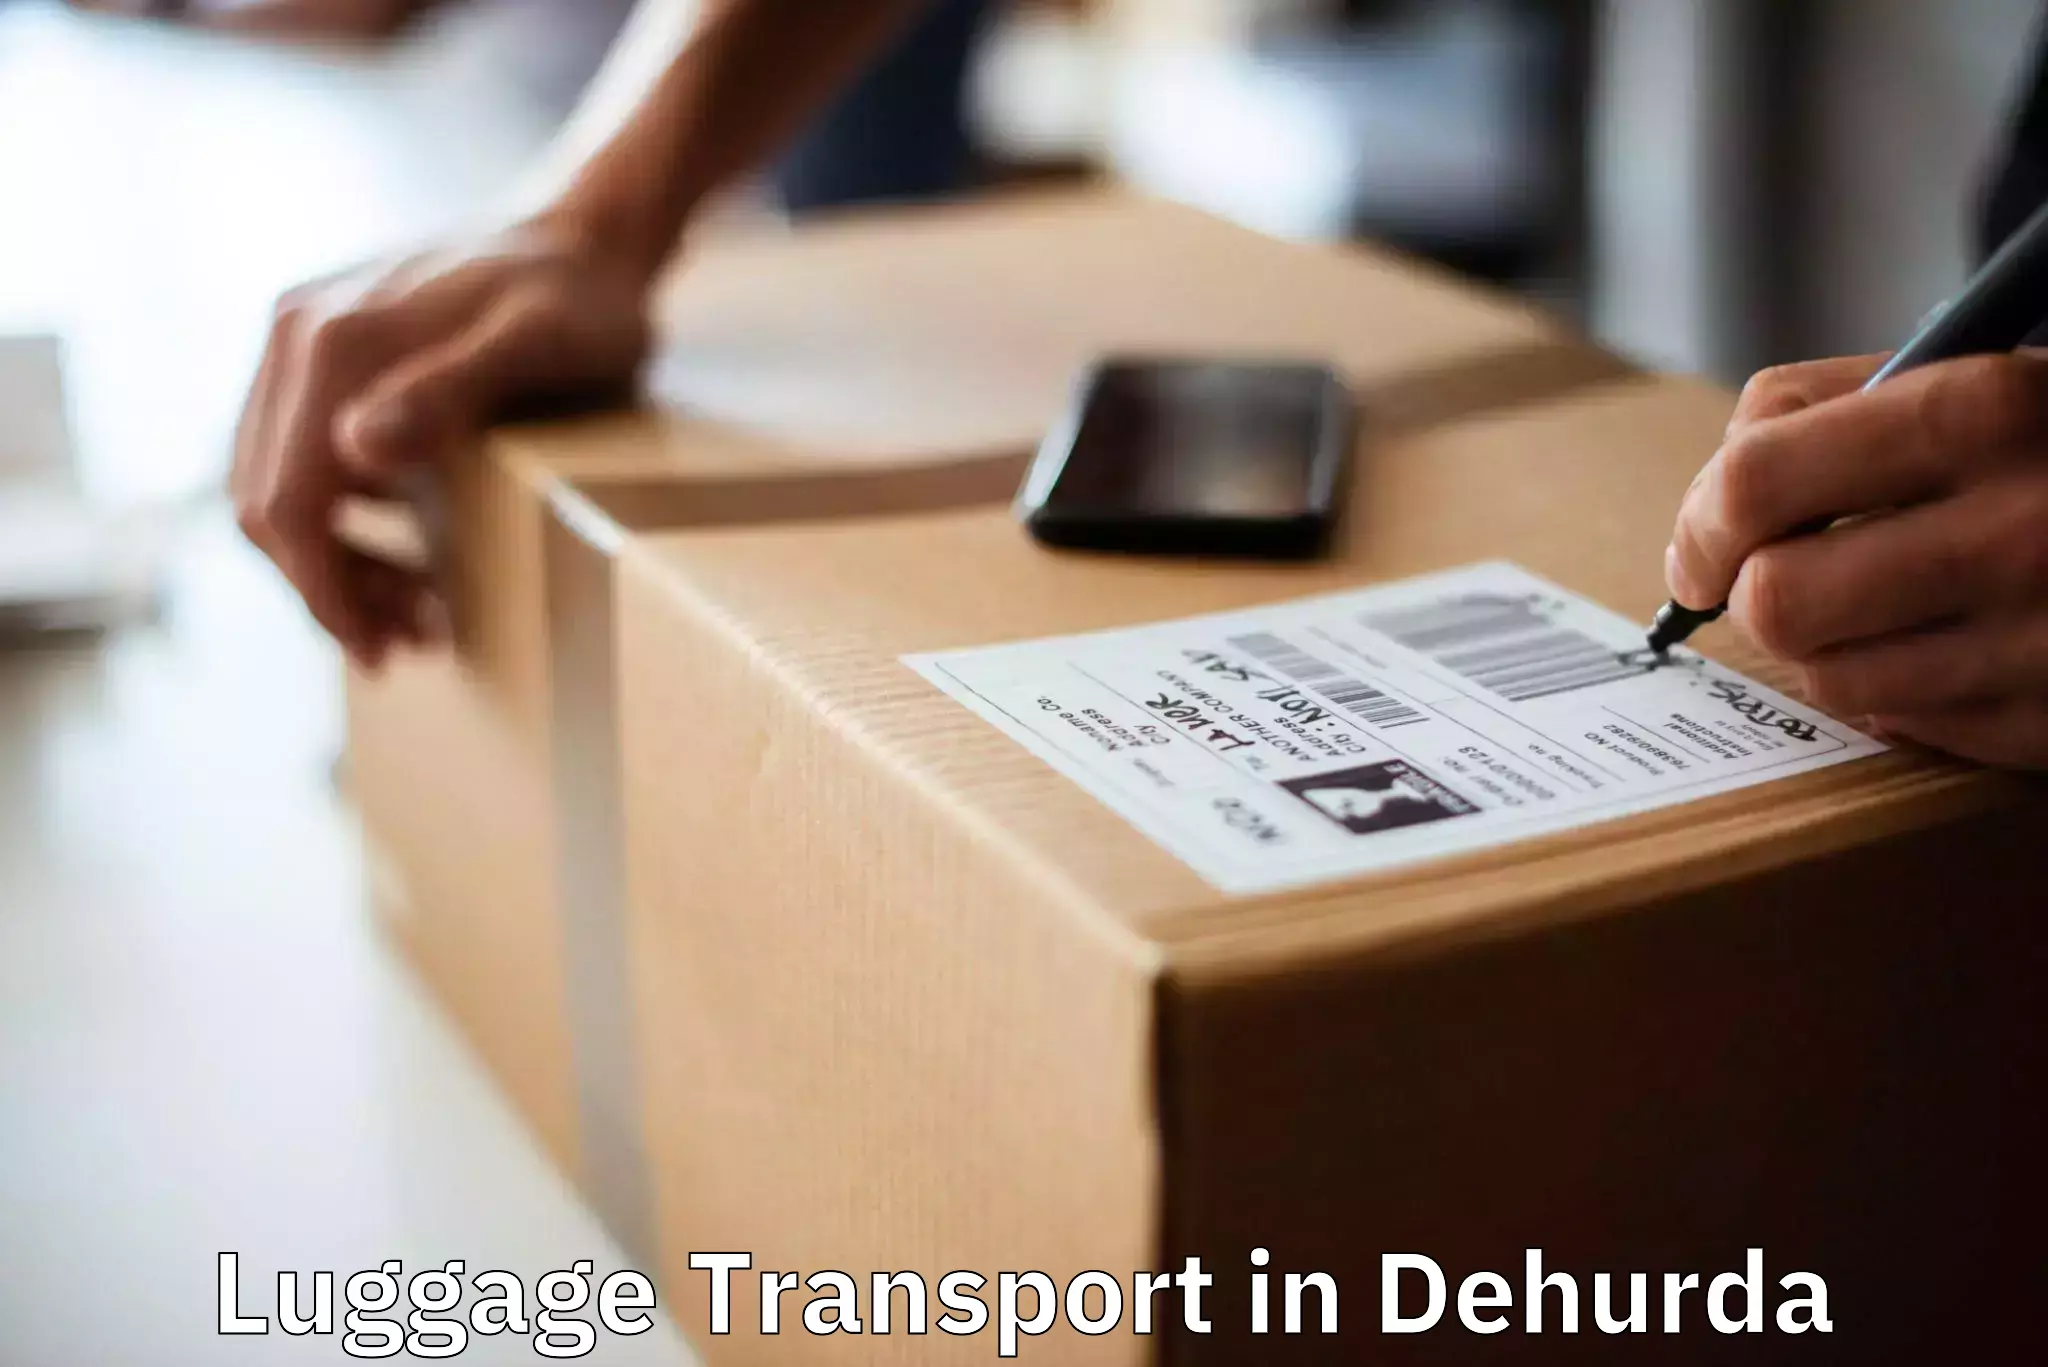 Luggage transport rates in Dehurda